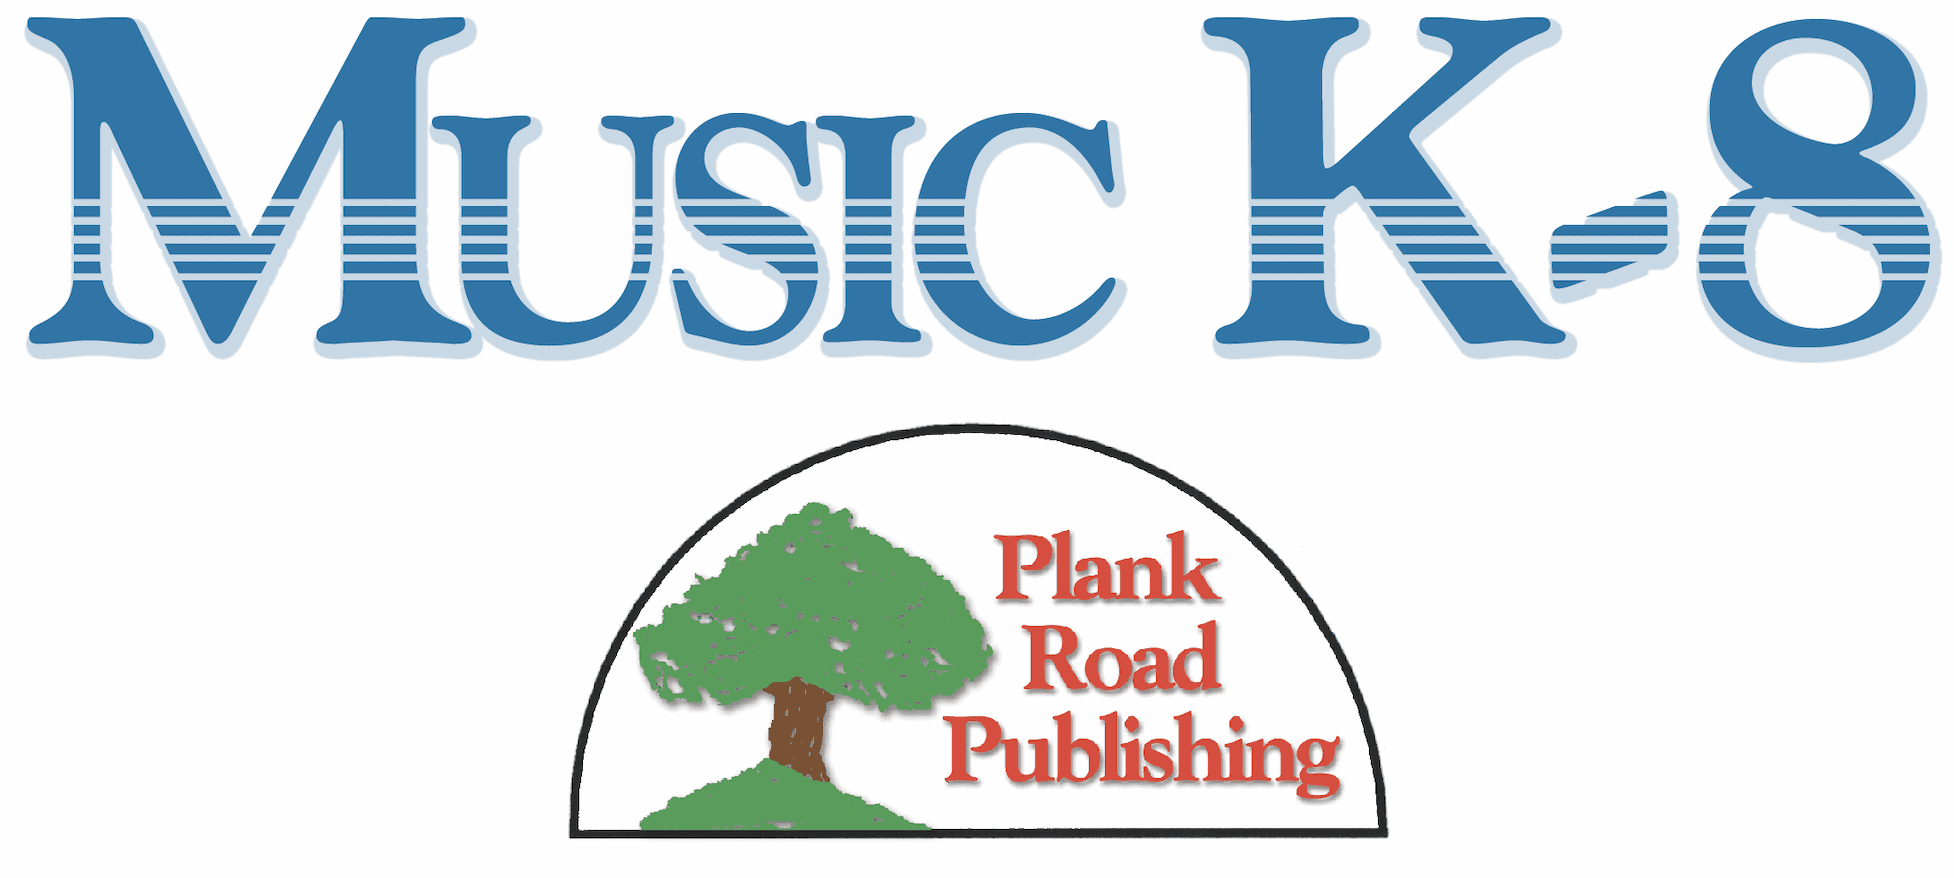 Music K-8 and Plank Road Publishing Logo